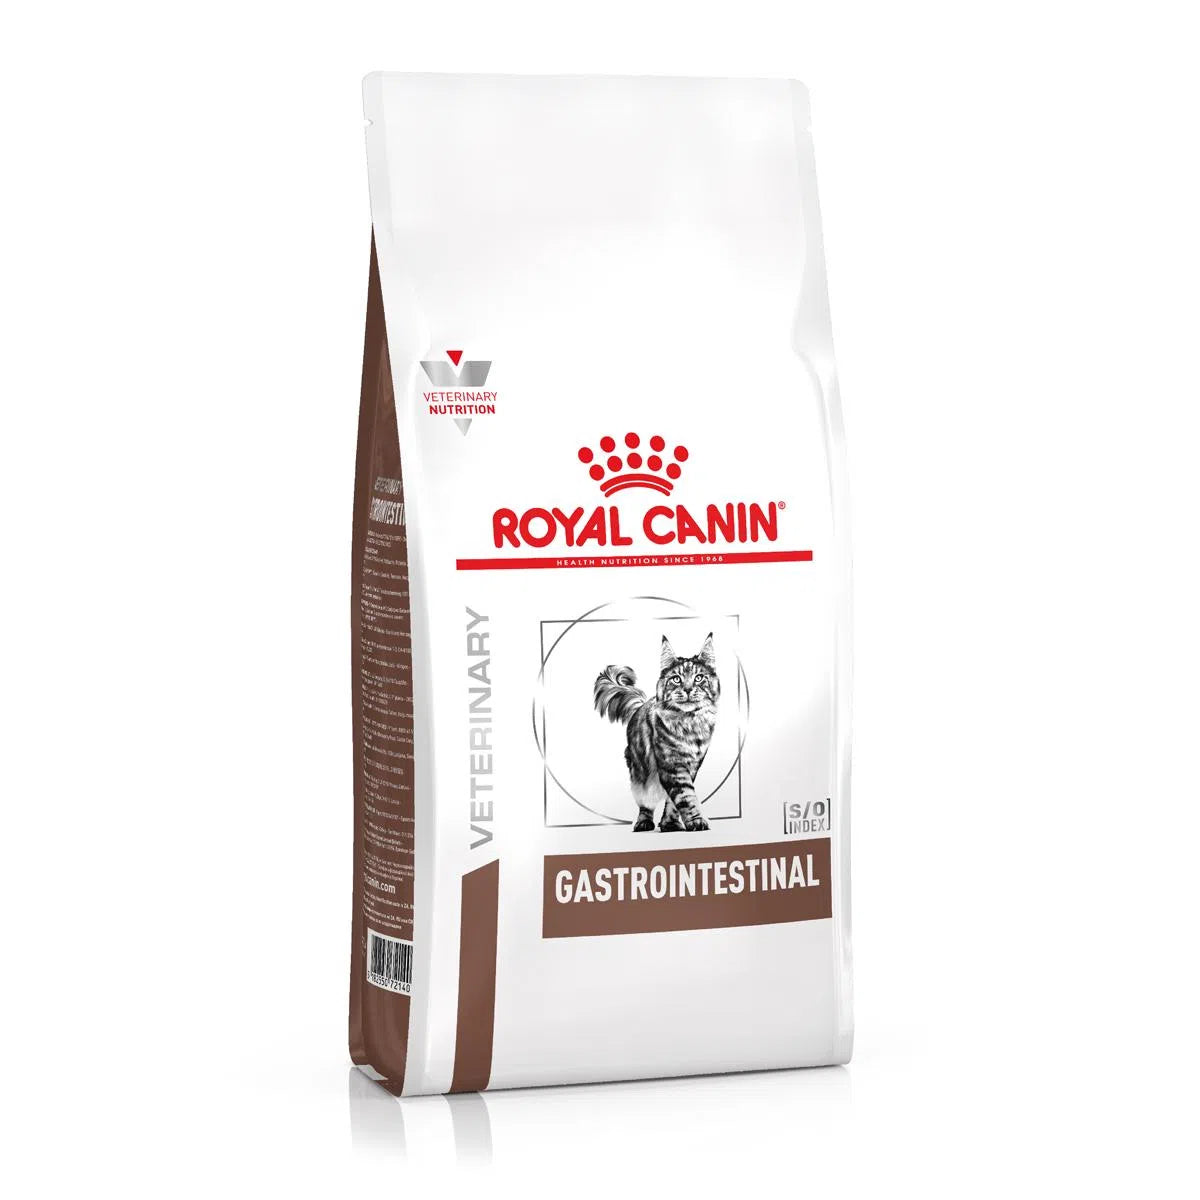 Royal Canin - Gastrointestinal - Gatto adulto - 2kg